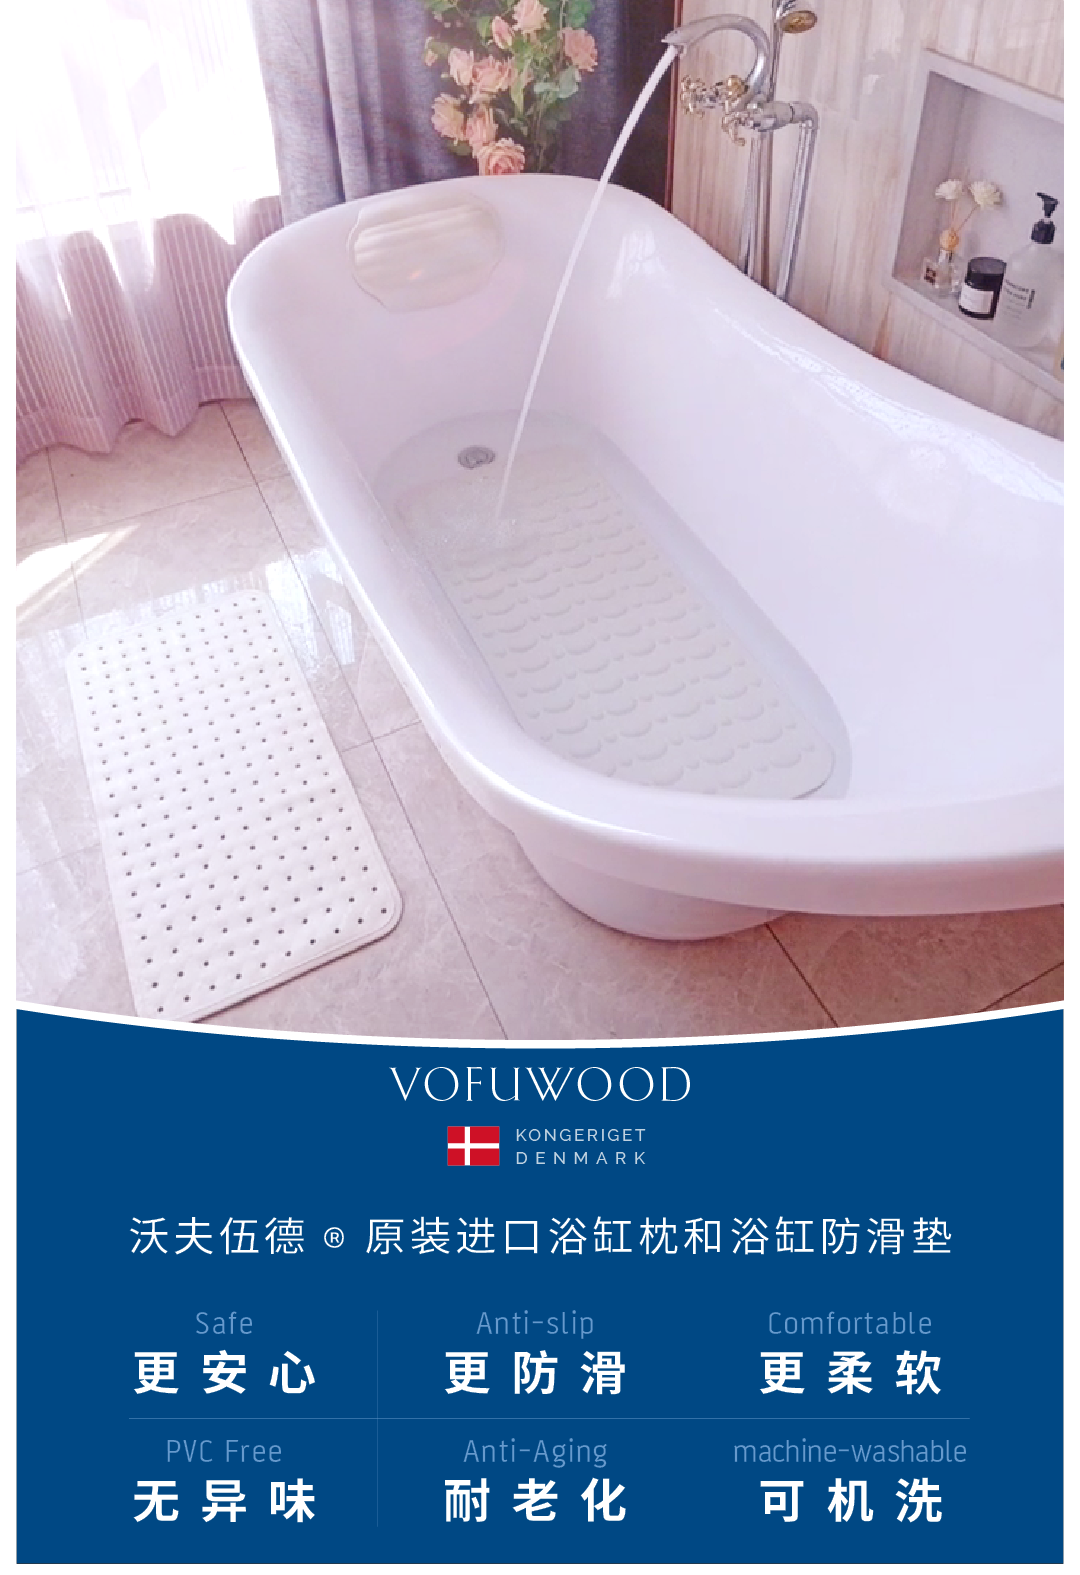 VOFUWOOD沃夫伍德原装进口浴缸枕头泡澡背靠坐垫浴盆内专用防滑垫